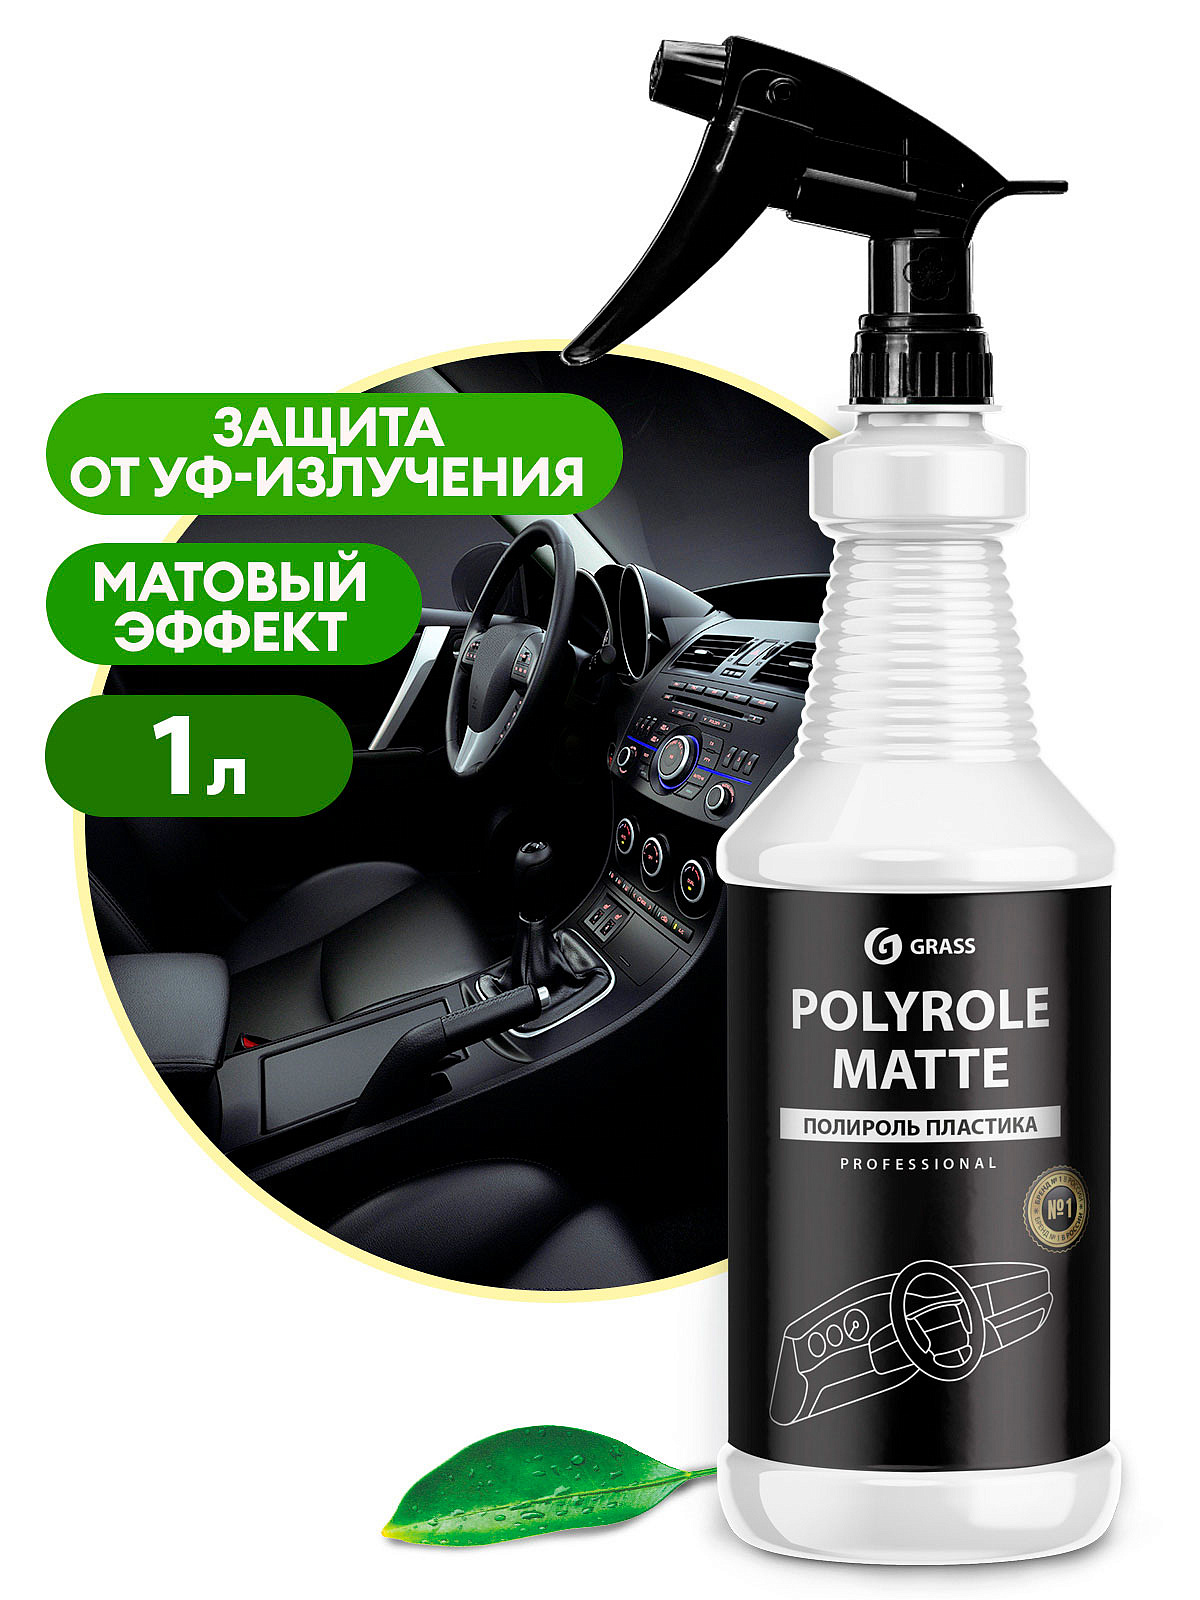 Полироль пластика "Polyrole Matte" виноград проф. линейка (флакон 1л)